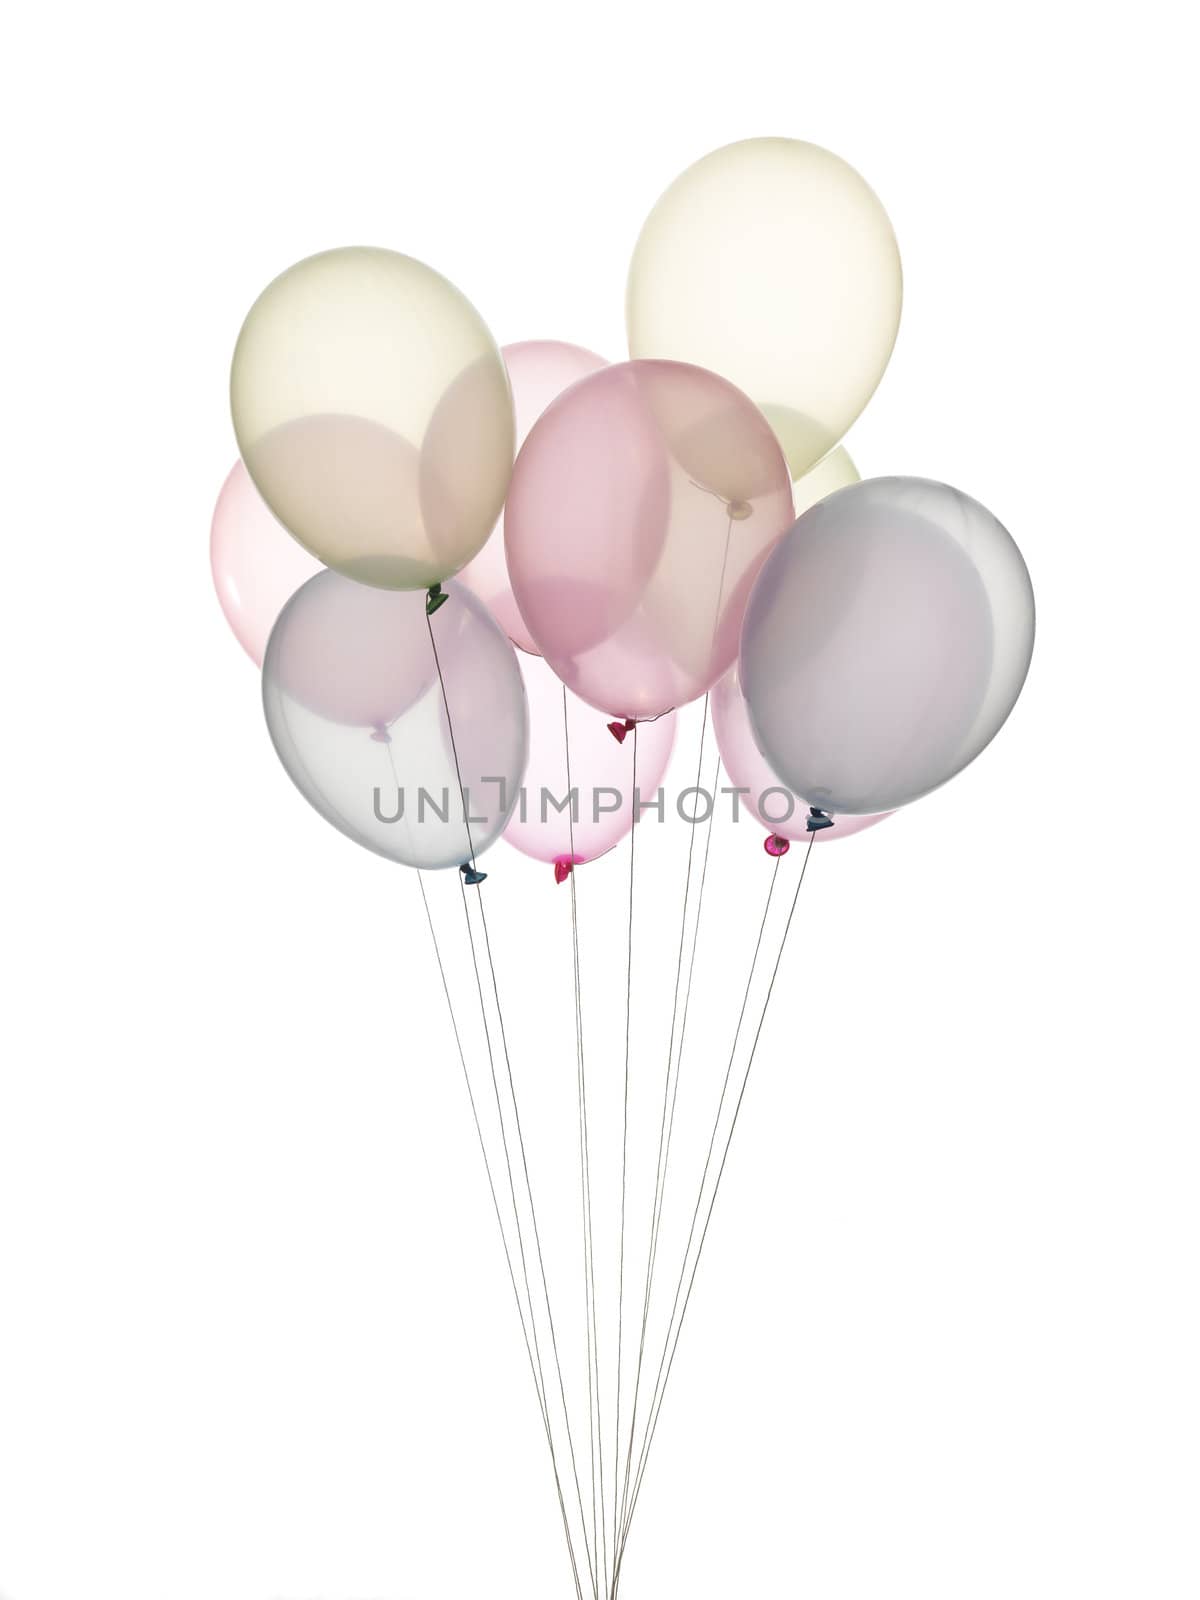 balloons by gemenacom